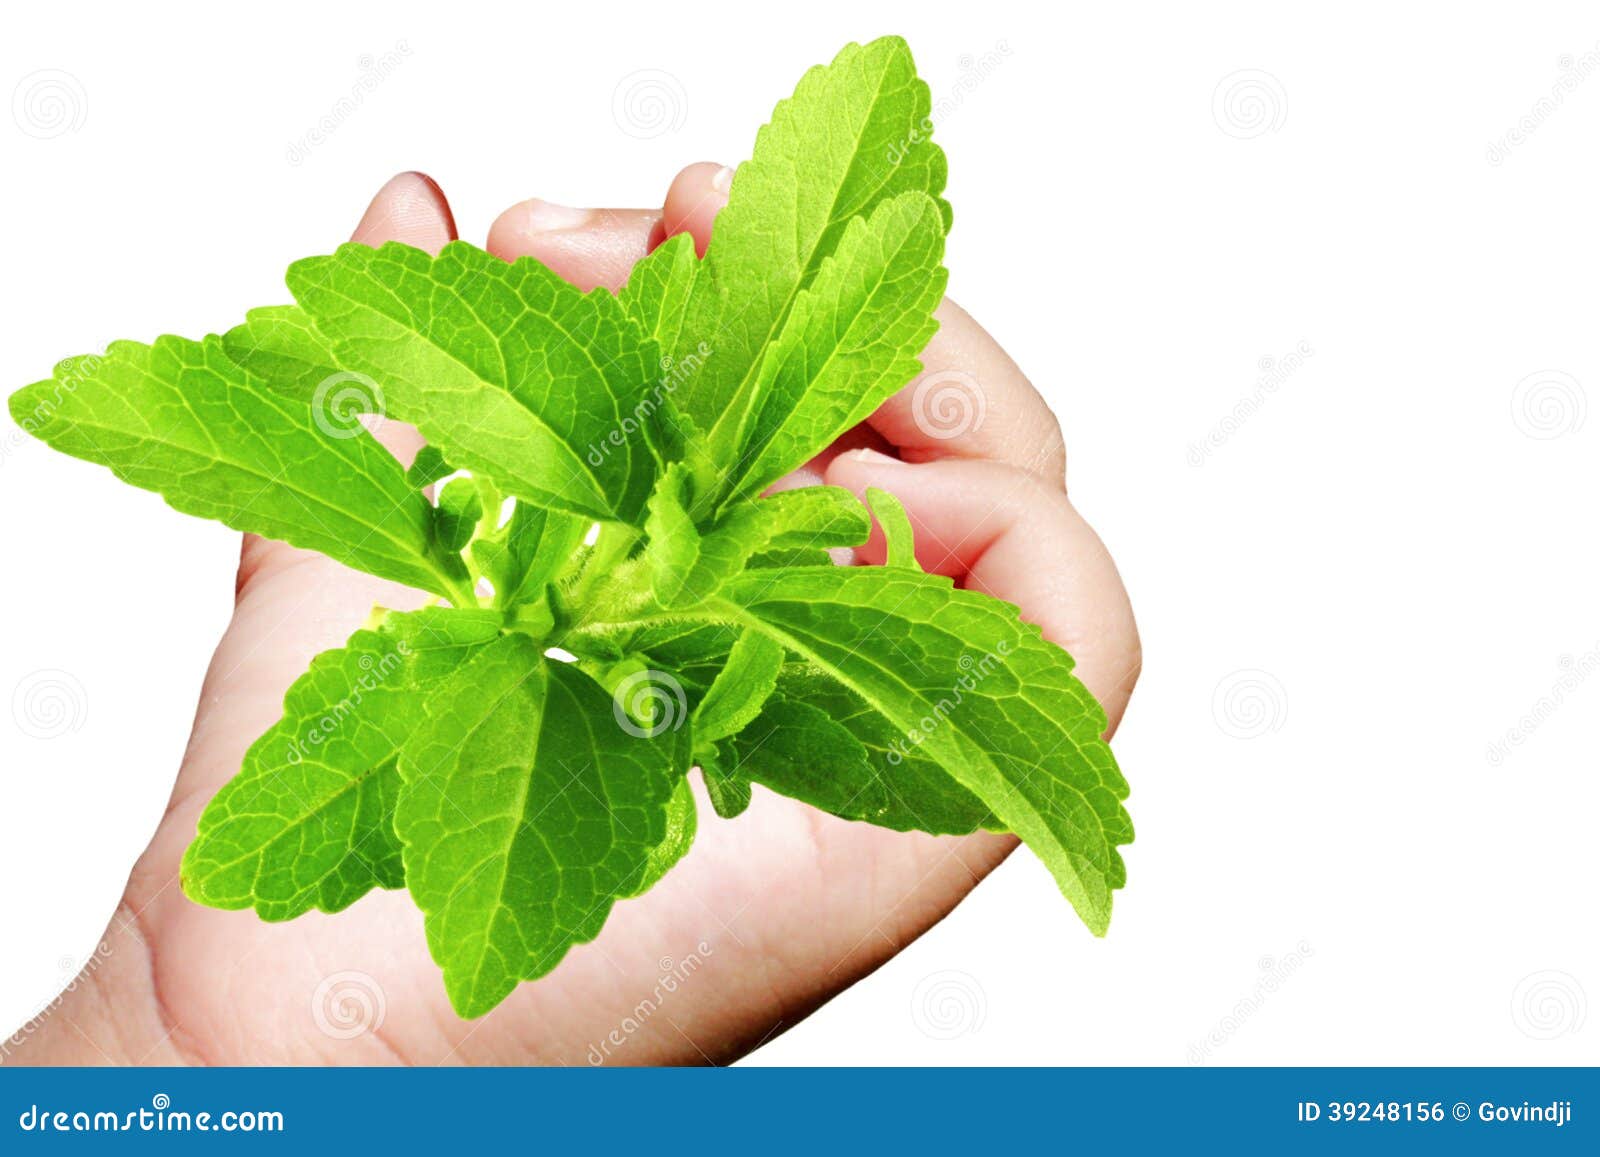 stevia sugar substitute herb in hand